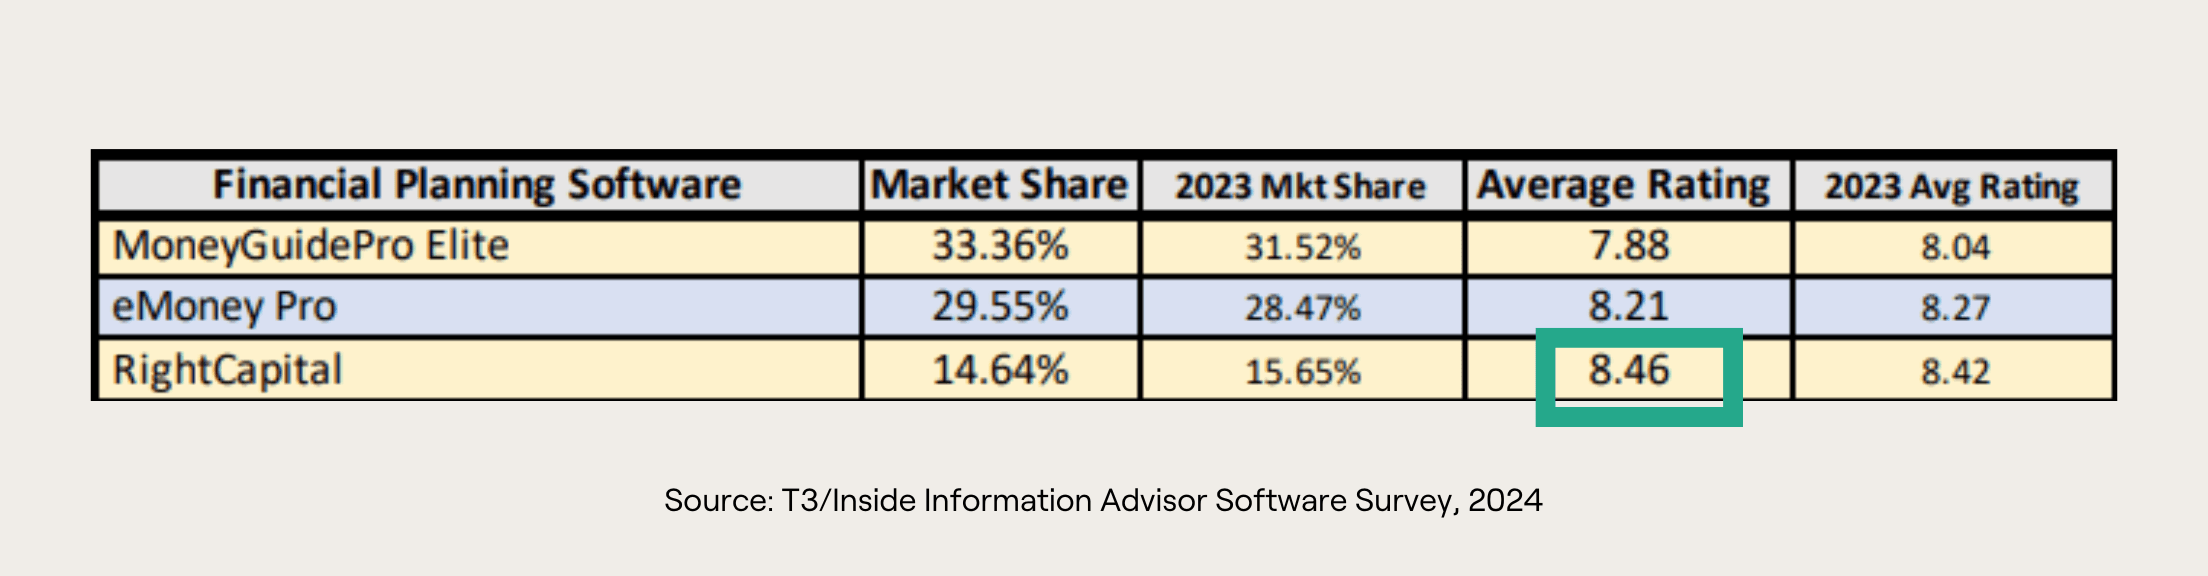 T3/Inside Information Advisor Software Survey ratings for financial planning software